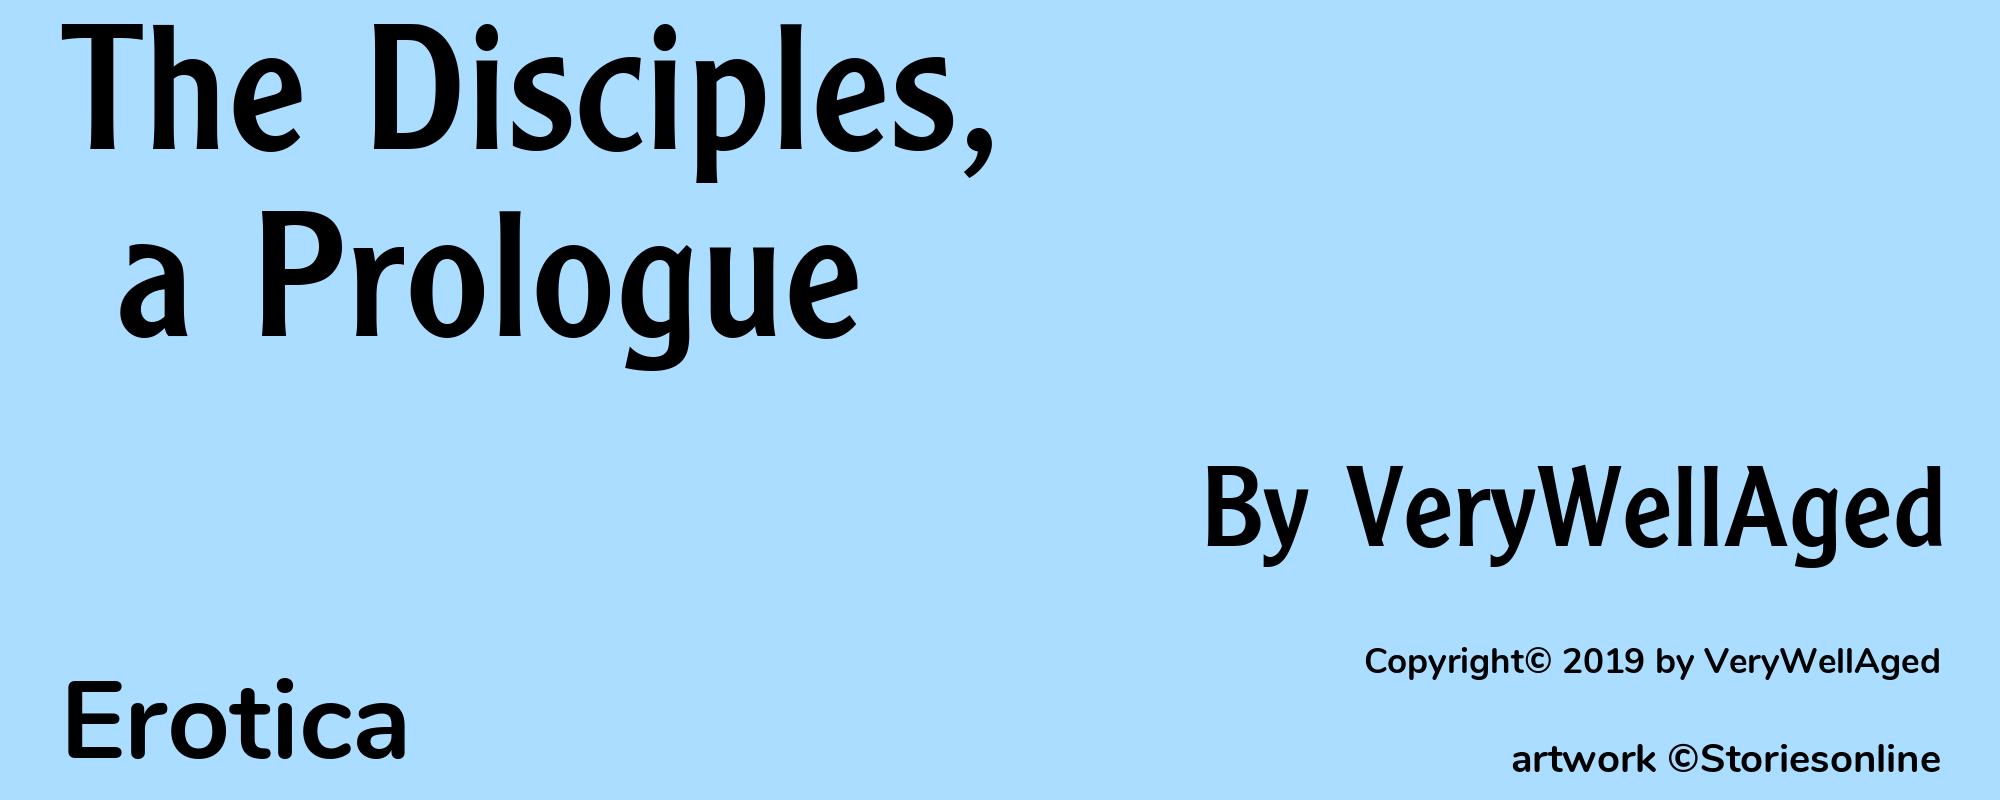 The Disciples, a Prologue - Cover